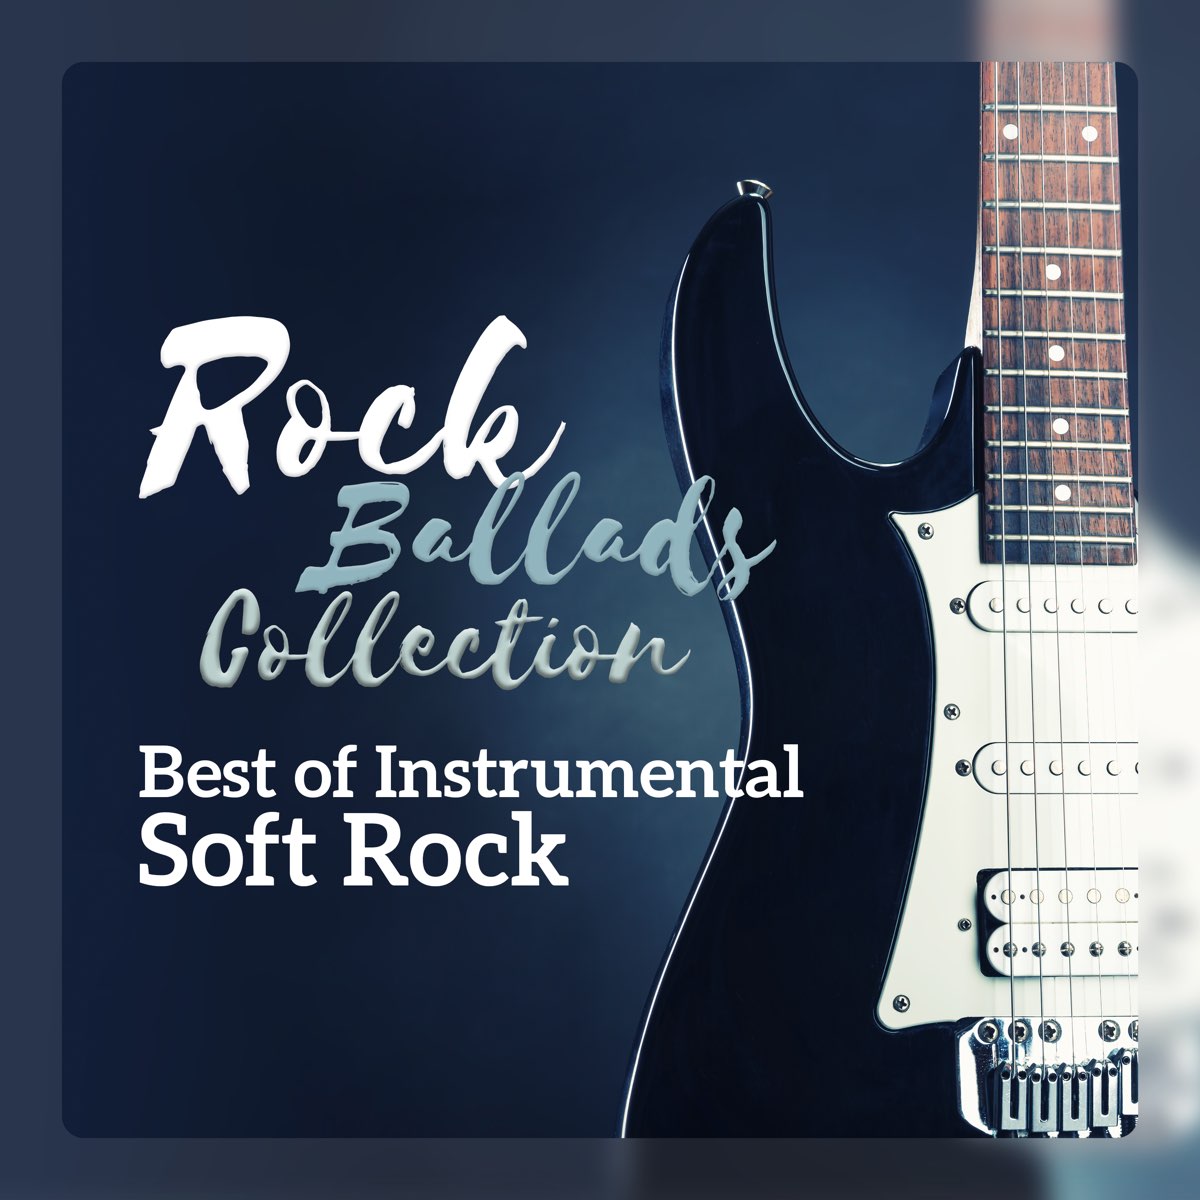 Across Polar bear drunk Rock Ballads Collection - Best of Instrumental Soft Rock by Rock  Destination Team on Apple Music